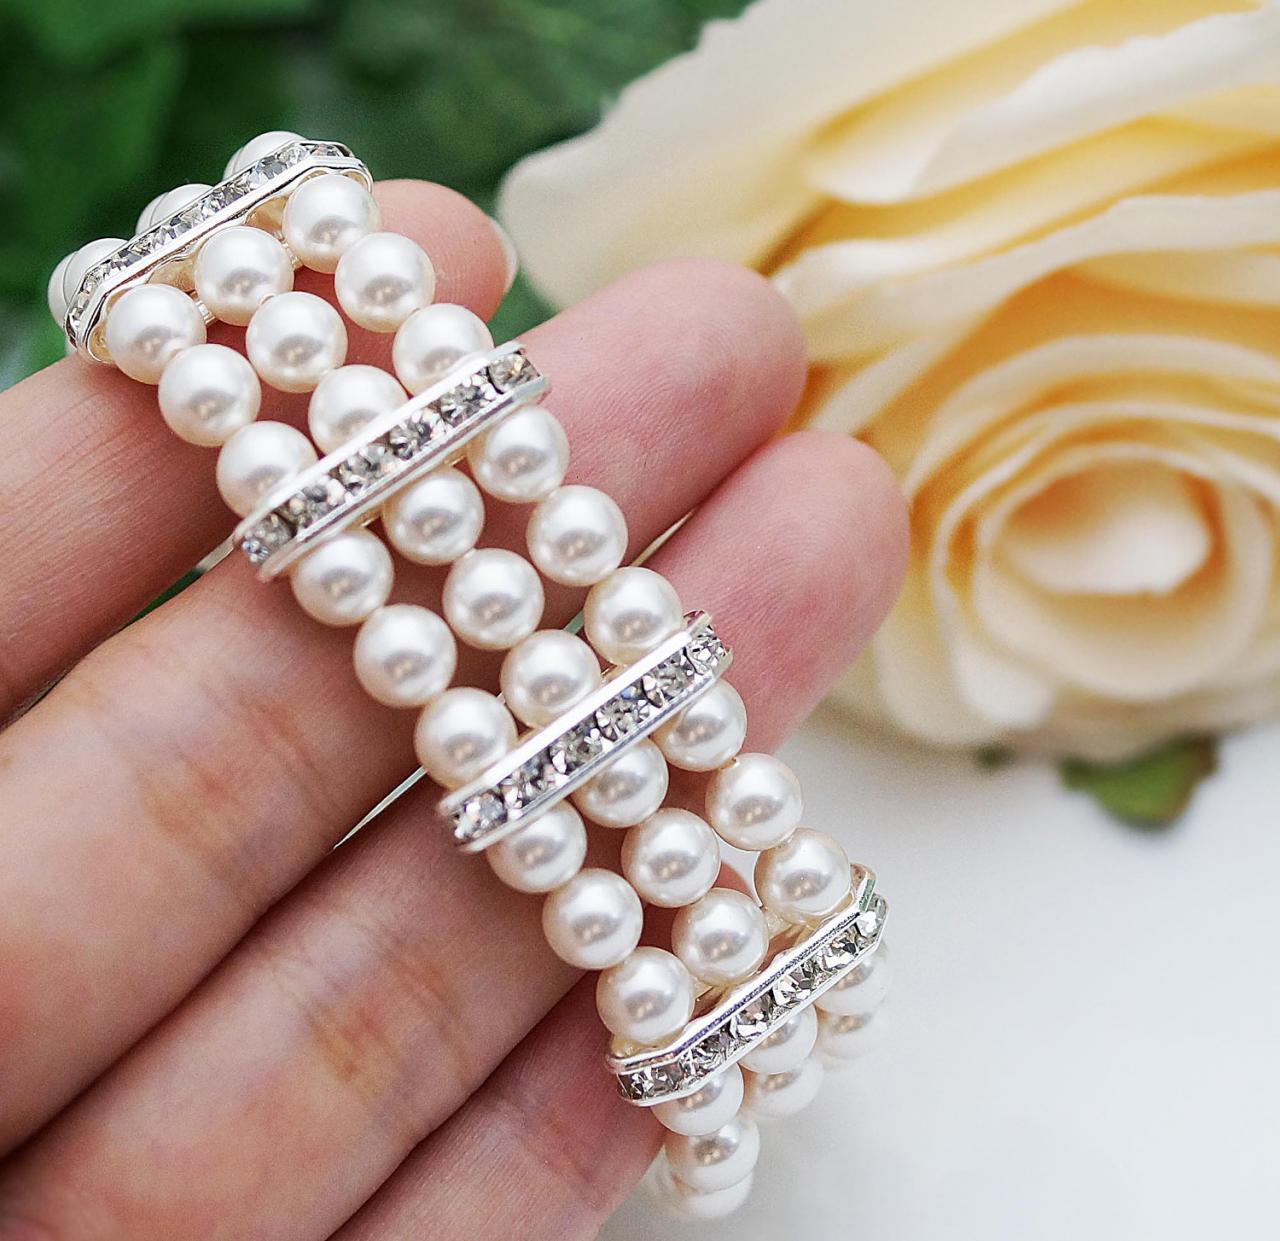 Wedding Jewelry Bridal Bracelet Bridesmaid Bracelet 3 Strands Of Crystal White Swarovski Pearls With Rhinestone Spacers Bracelet